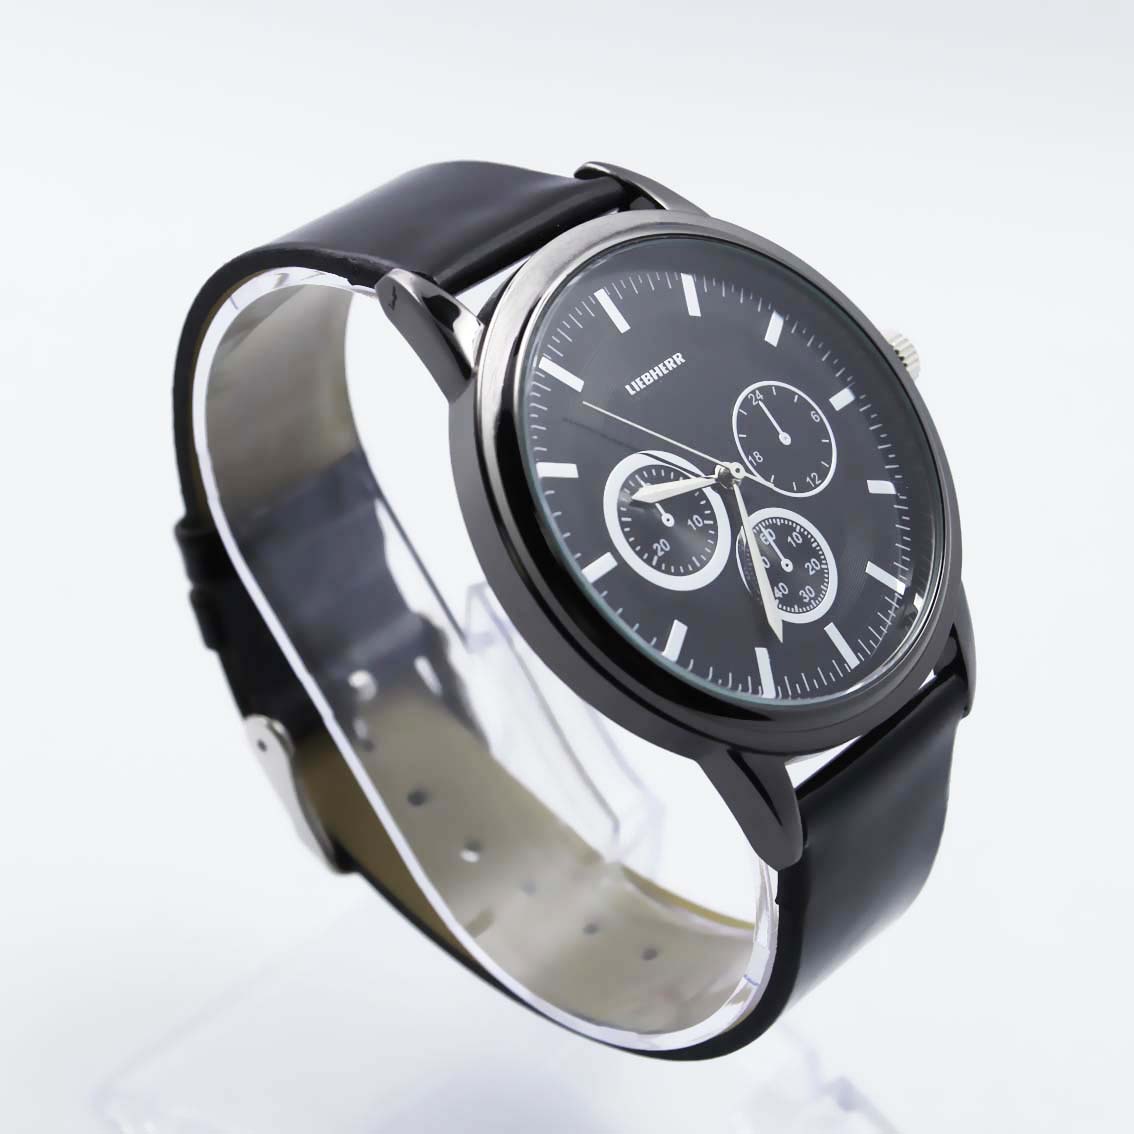 #02011Men's wristwatch quartz analog leather strap watch